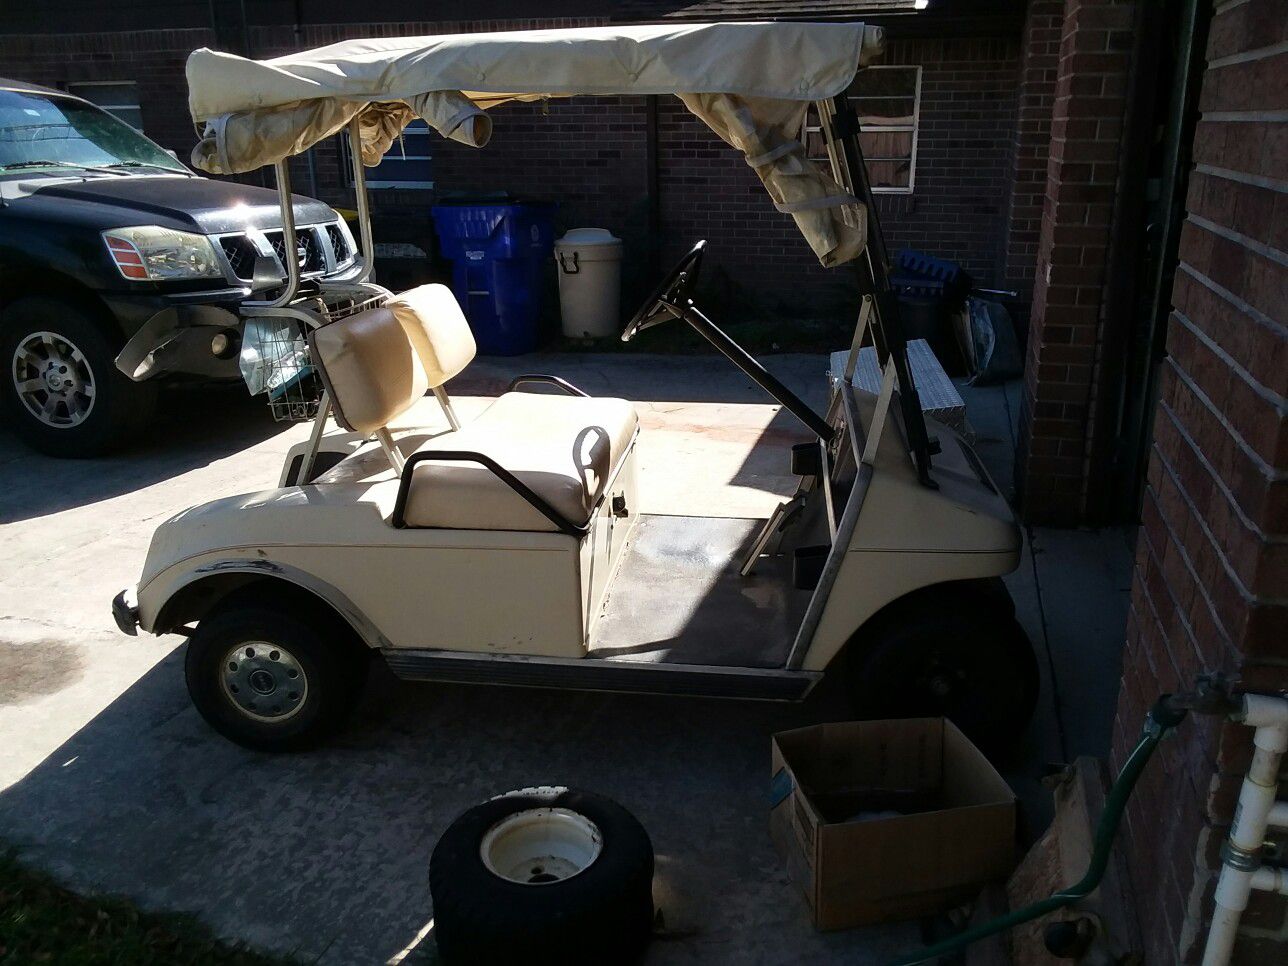 Club Cadet golf cart